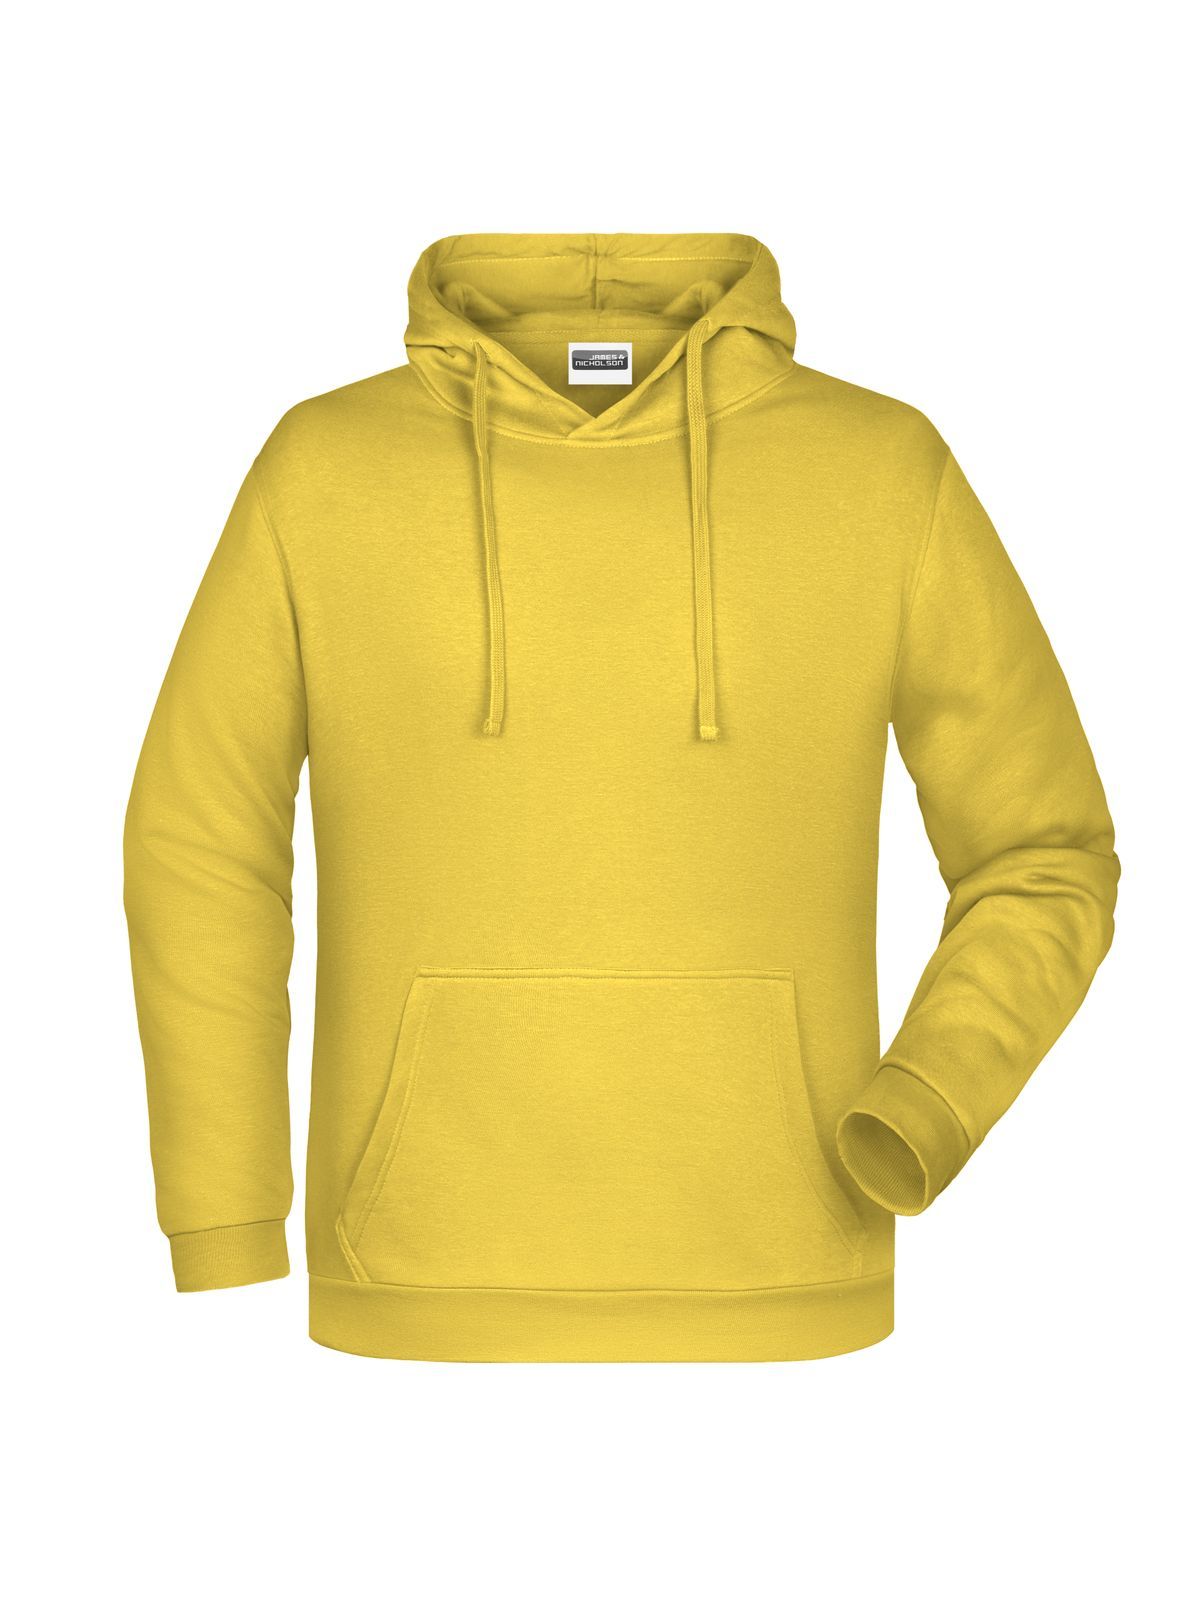 basic-hoody-man-yellow.webp